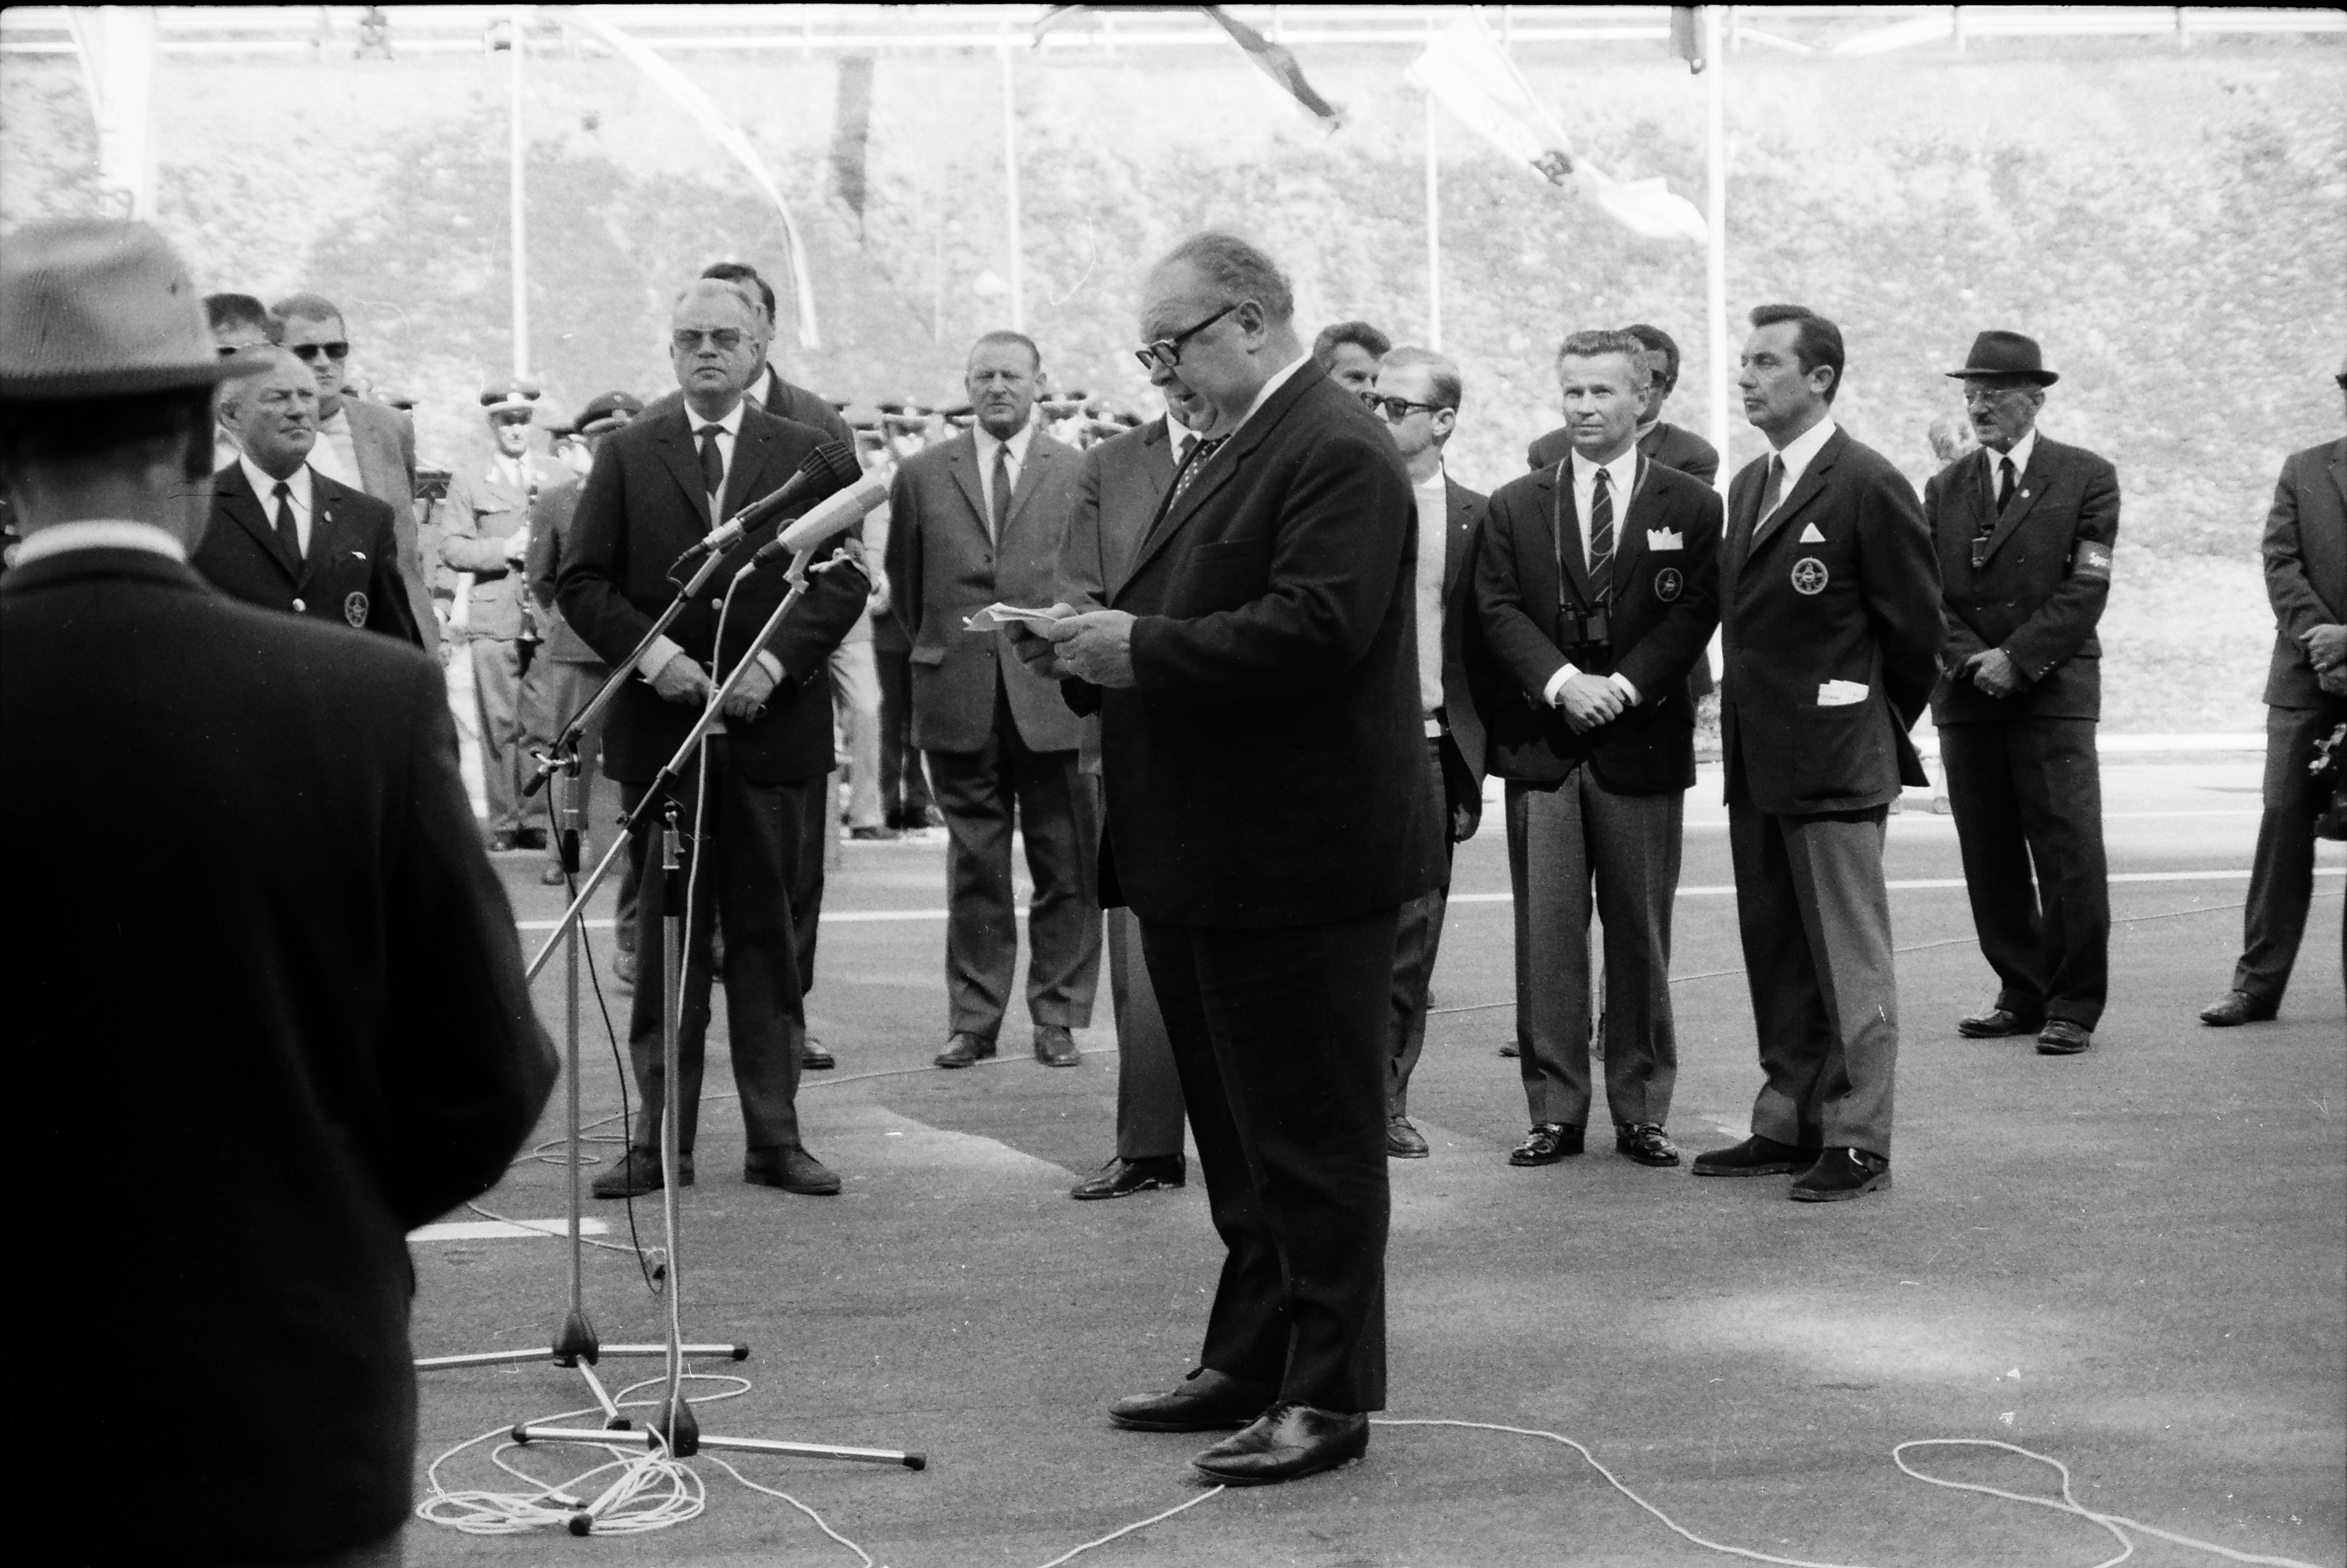 1969.09.21-ero êffnung-salzburgring-ero êffnungszeremonie-sbg-ring-1969-lhptm.-dr.-lechner-3-hq